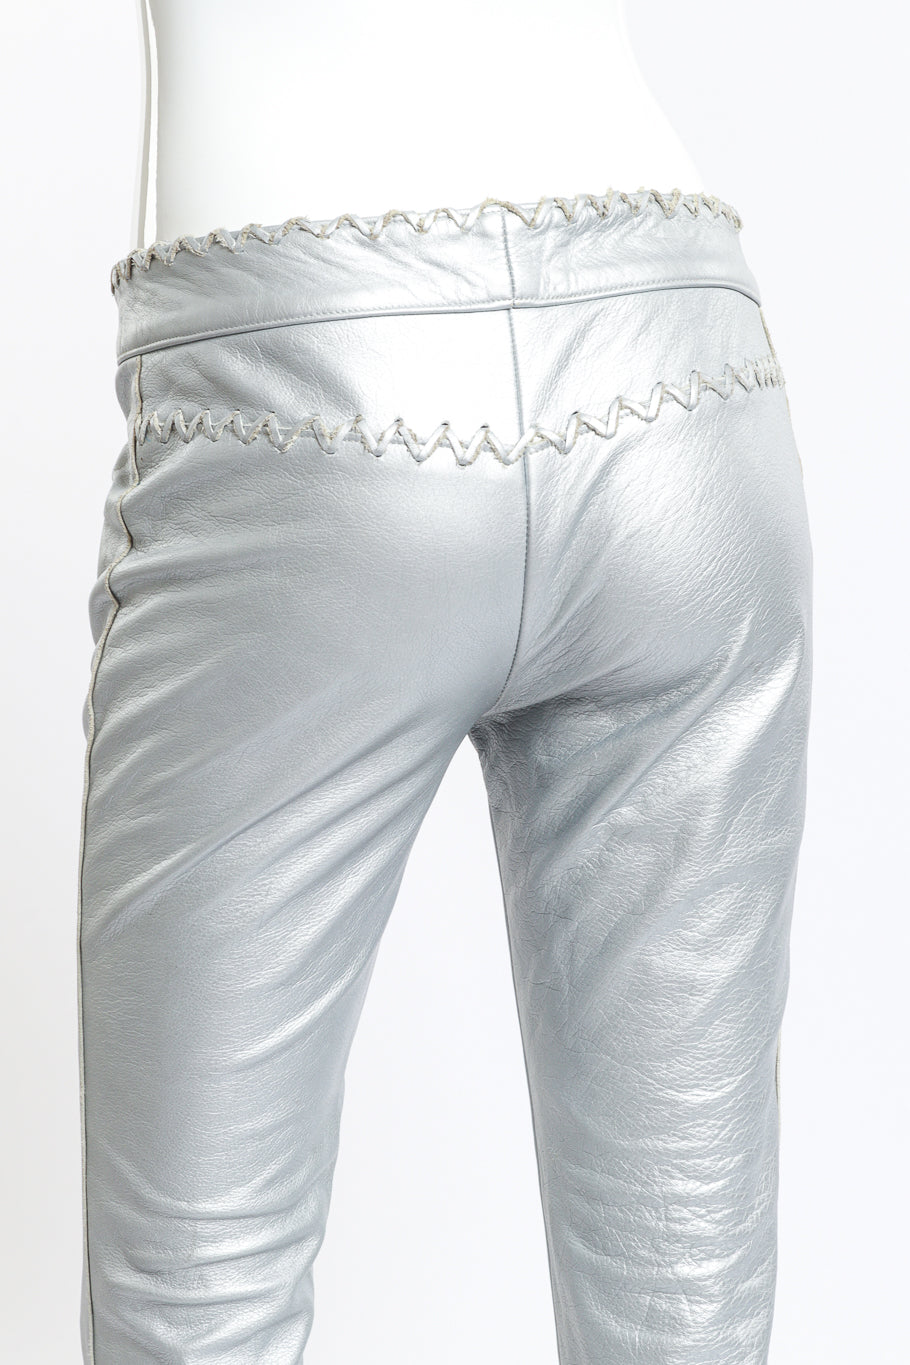 Silver Leather Pants by Frankie B back detail mannequin @RECESS LA